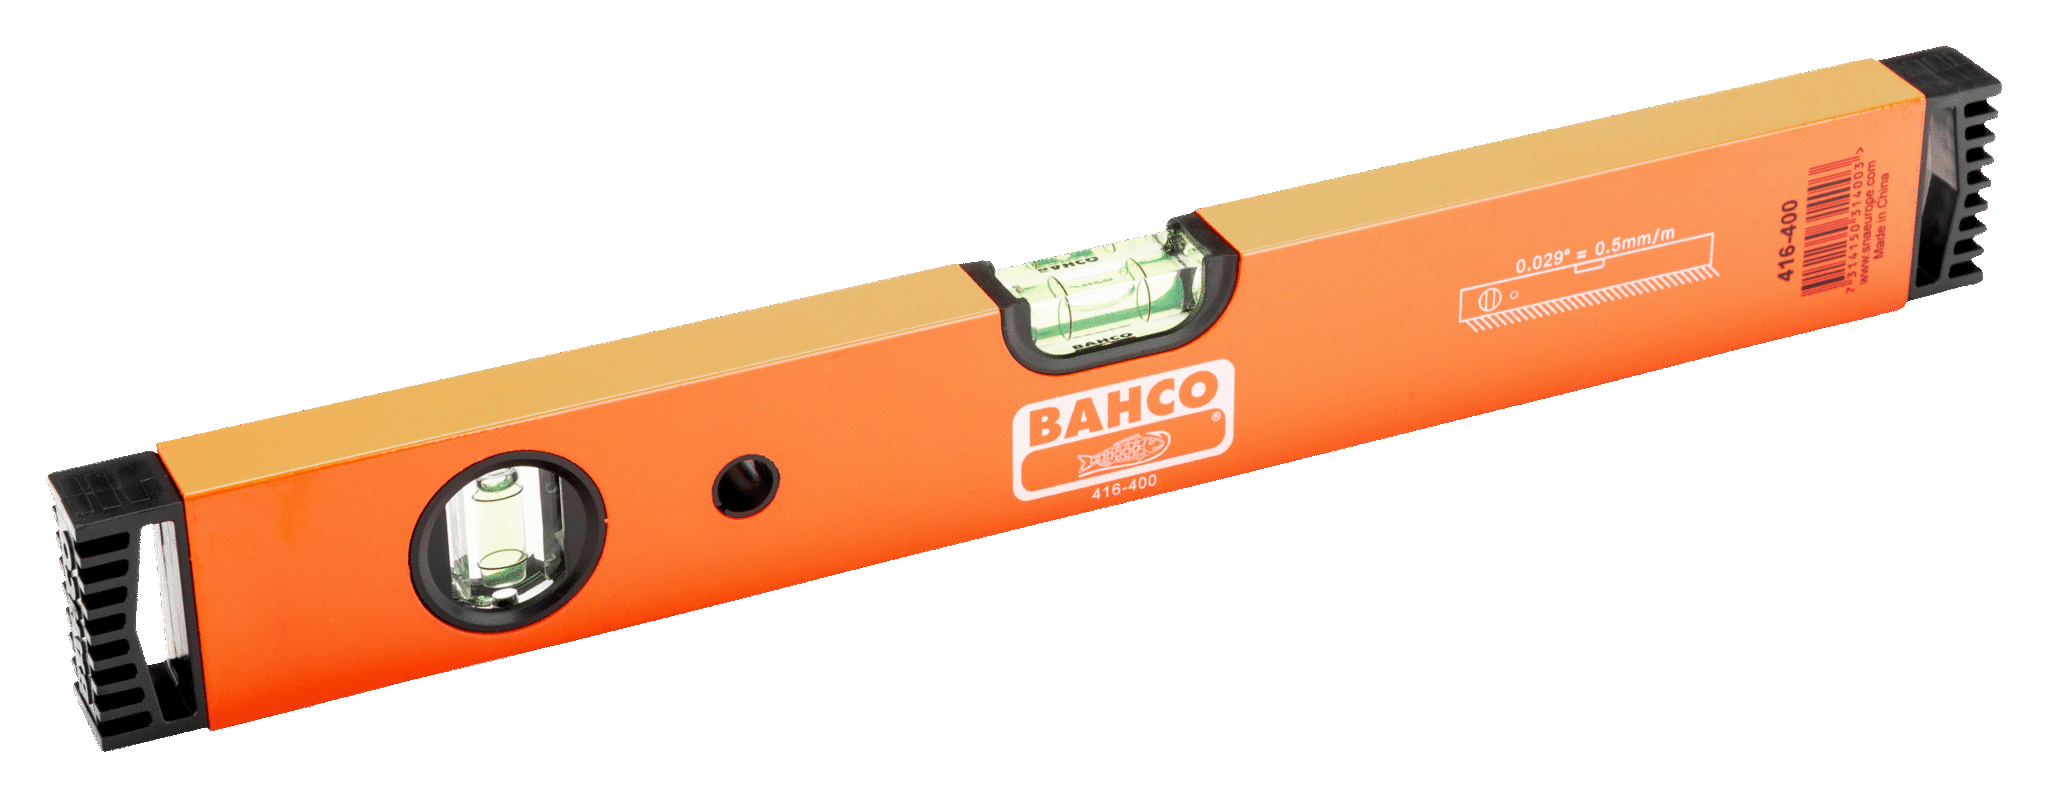 Bahco 6 in environ 15.24 cm Combination Set Carré 150 mm en Acier Inoxydable Ruler Spirit Level CS150 